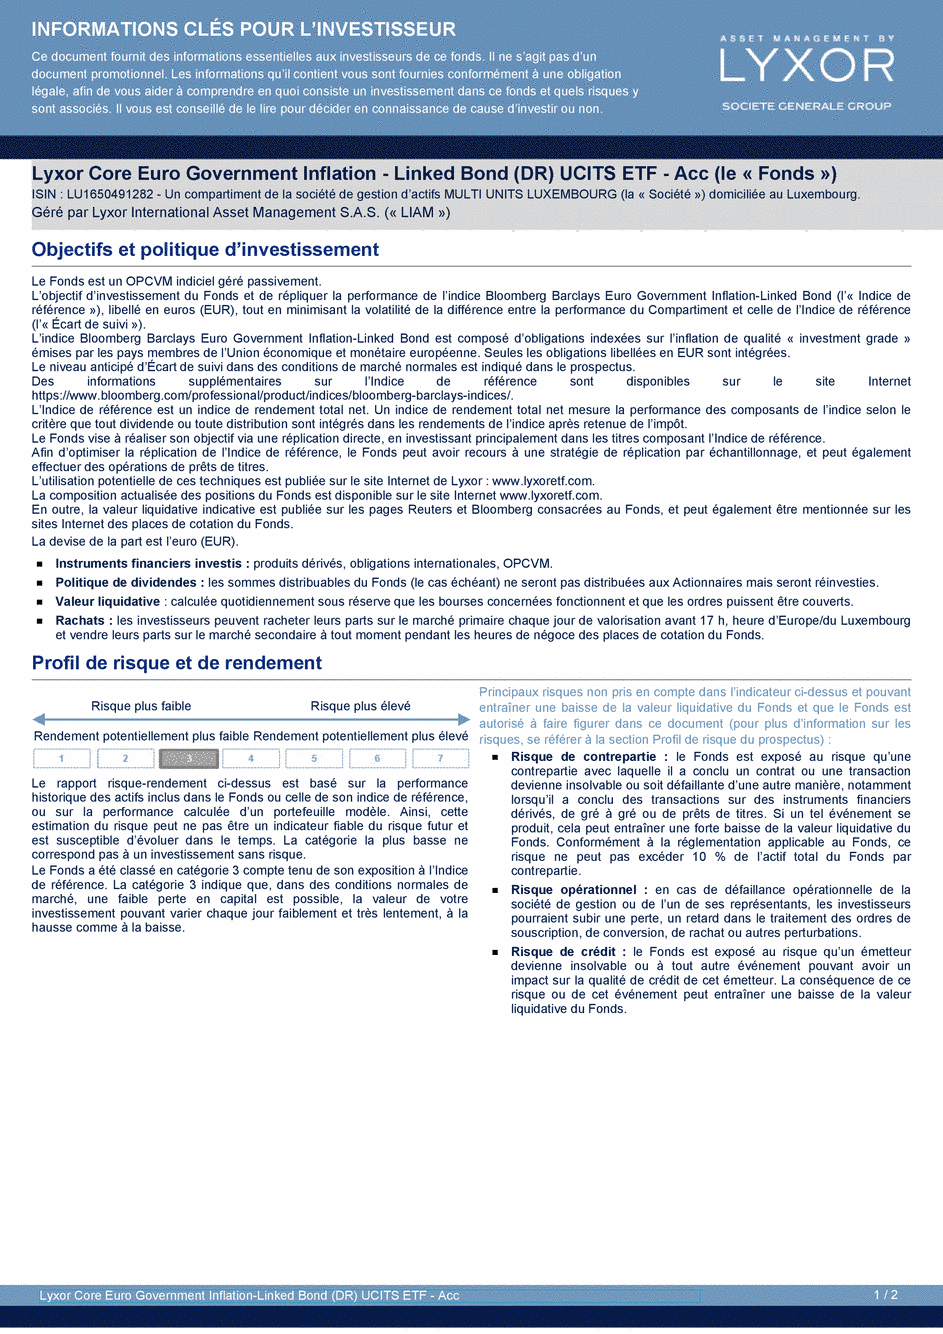 DICI Lyxor Core Euro Government Inflation-Linked Bond (DR) UCITS ETF - Acc - 24/02/2021 - Français